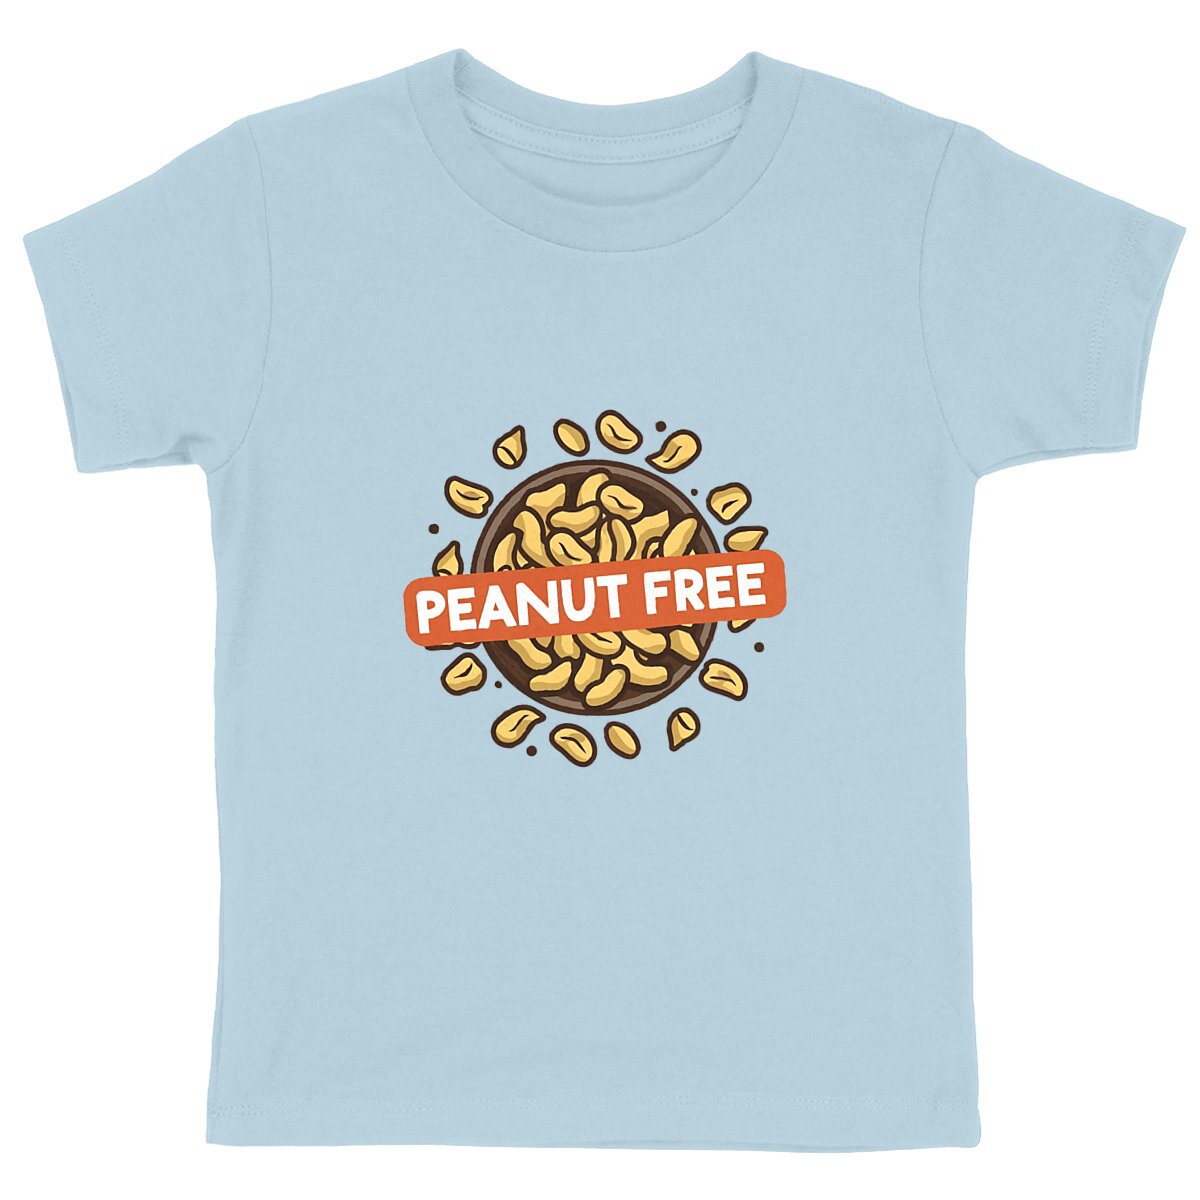 Peanut Free Organic Cotton Graphic Kid's Shirt | Hypoallergenic - Allergy Friendly - Naturally Free